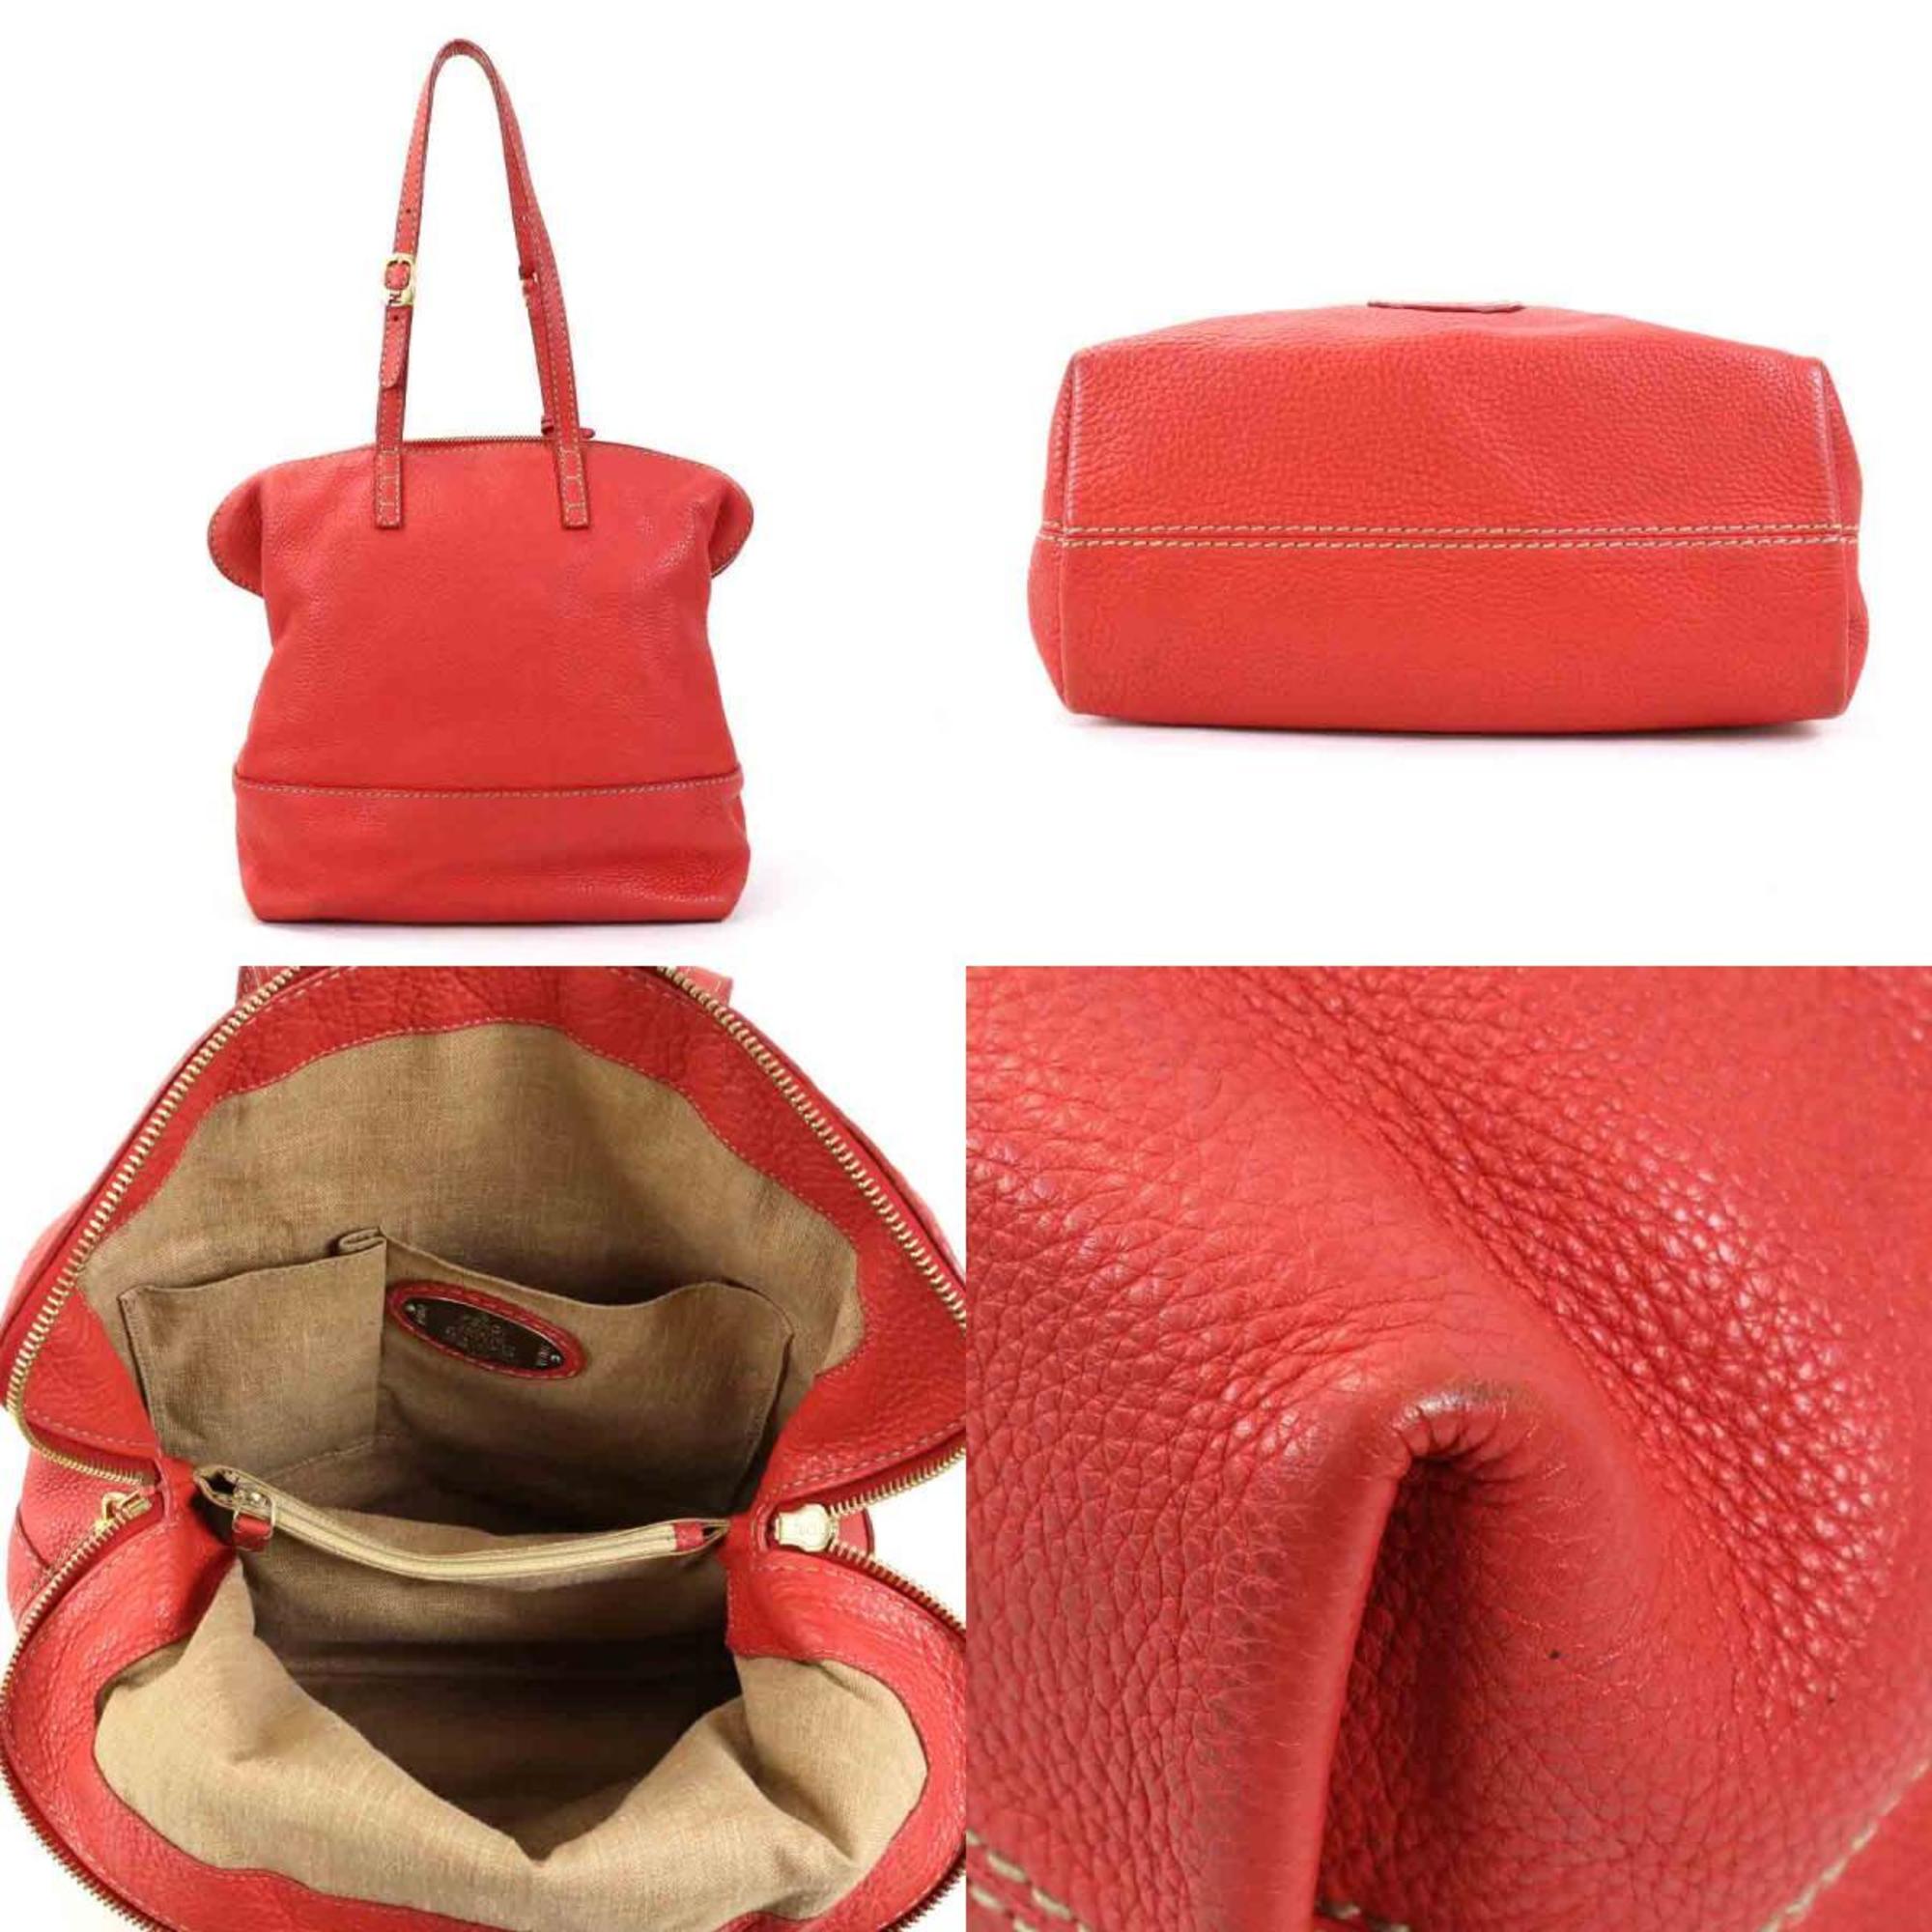 Fendi FENDI shoulder bag Selleria leather red gold ladies